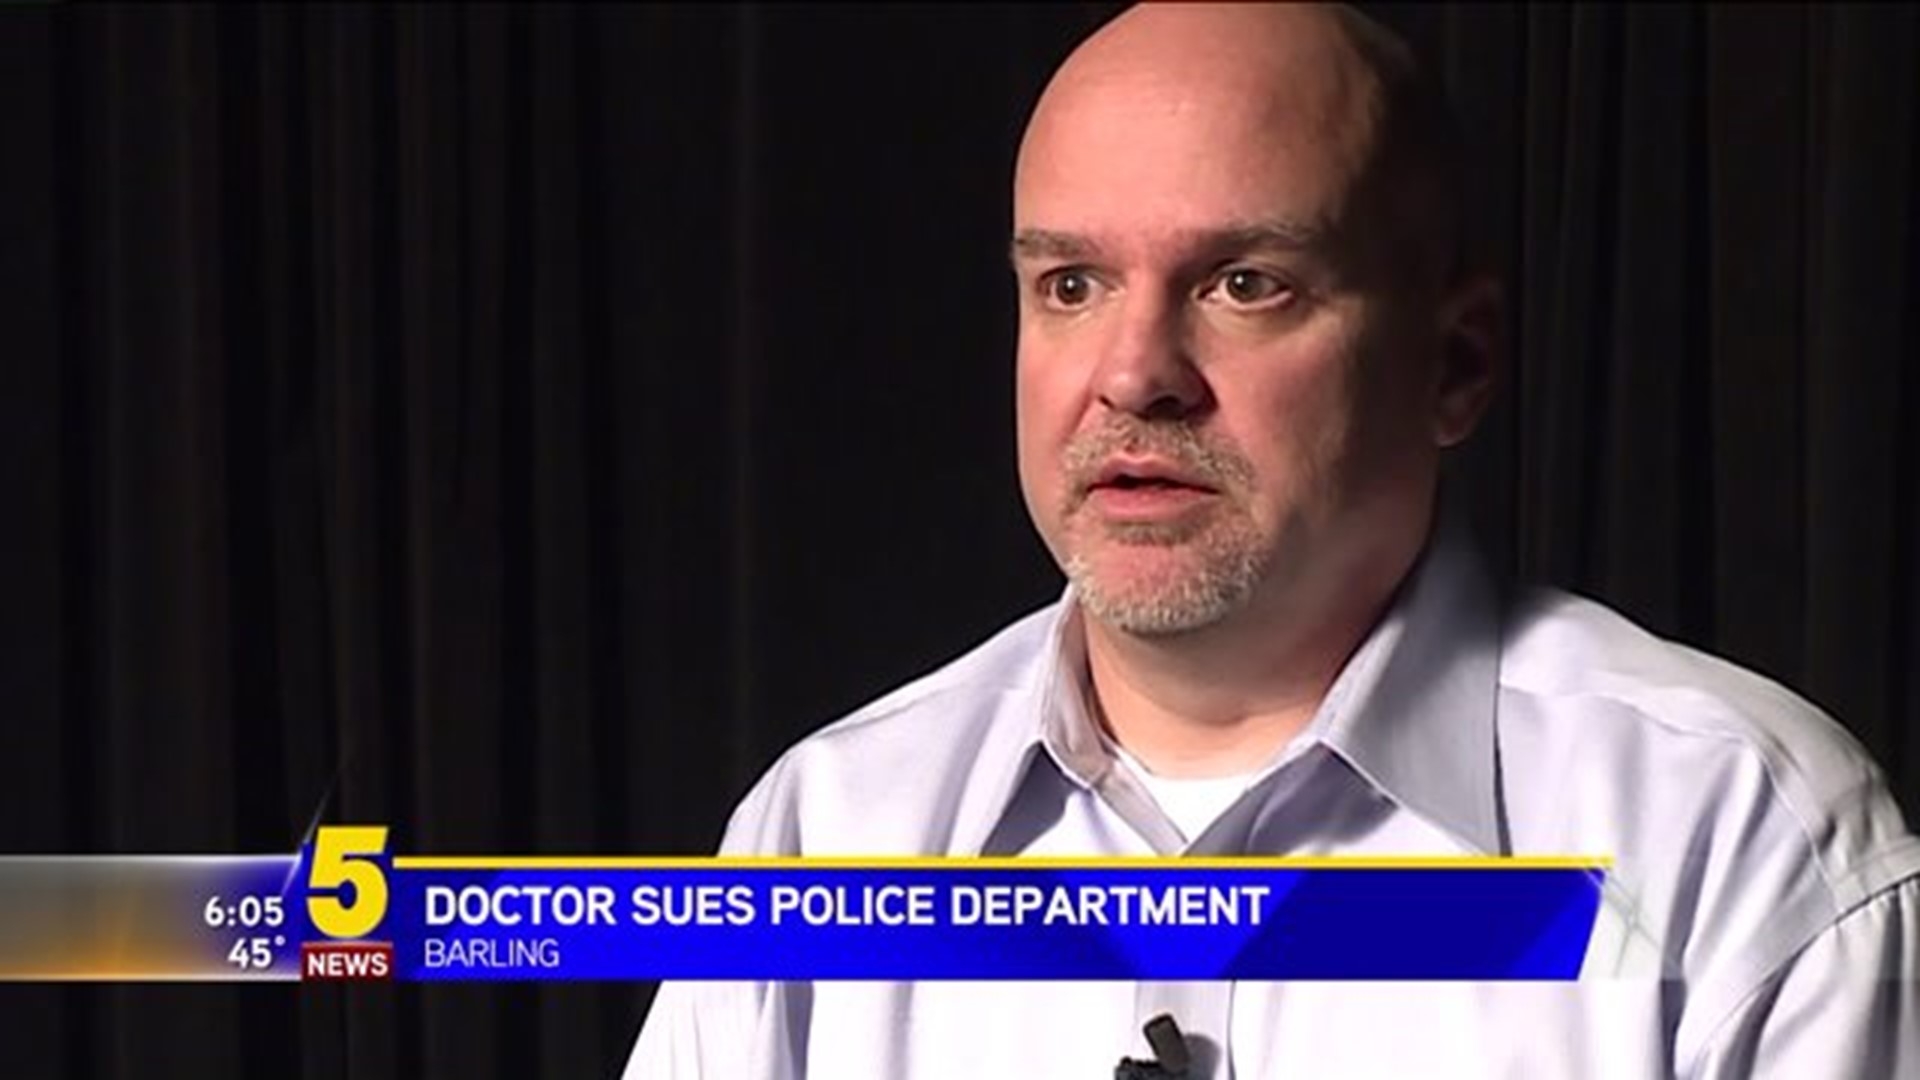 Doctor Files Lawsuit Against Barling Police Department